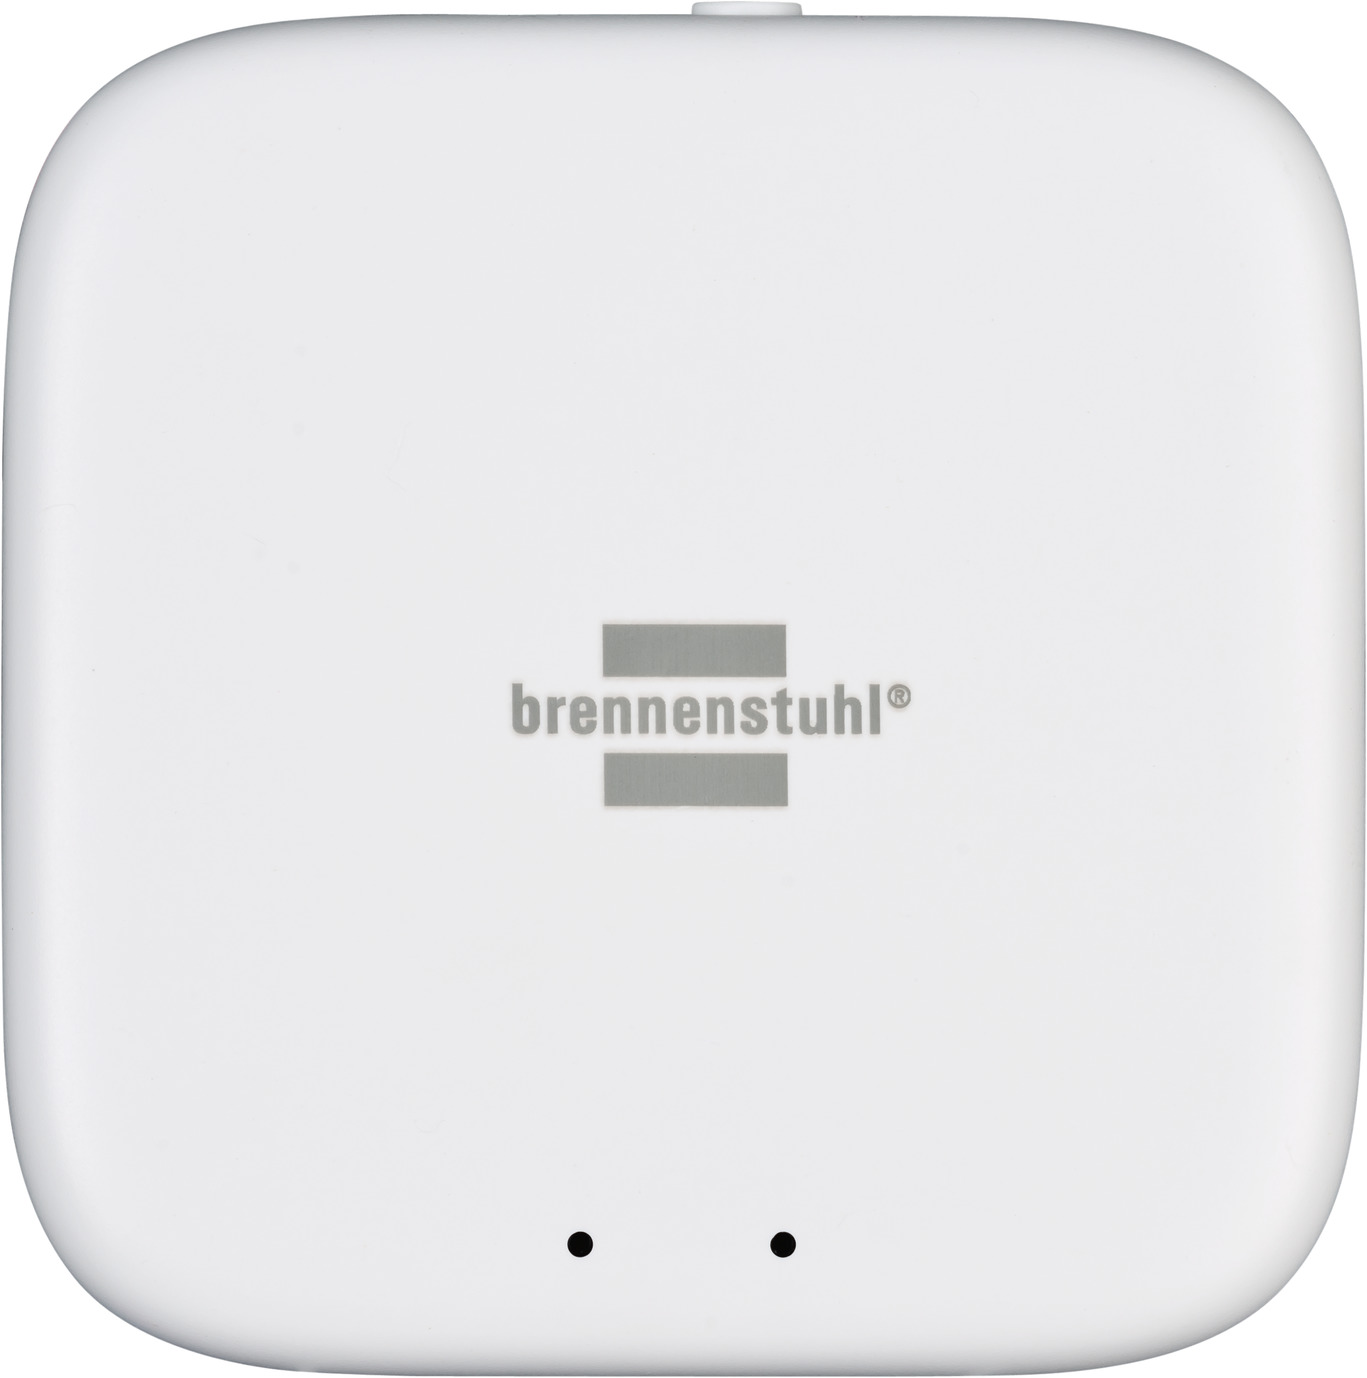 brennenstuhl®Connect Zigbee radiator thermostat HT CZ 01